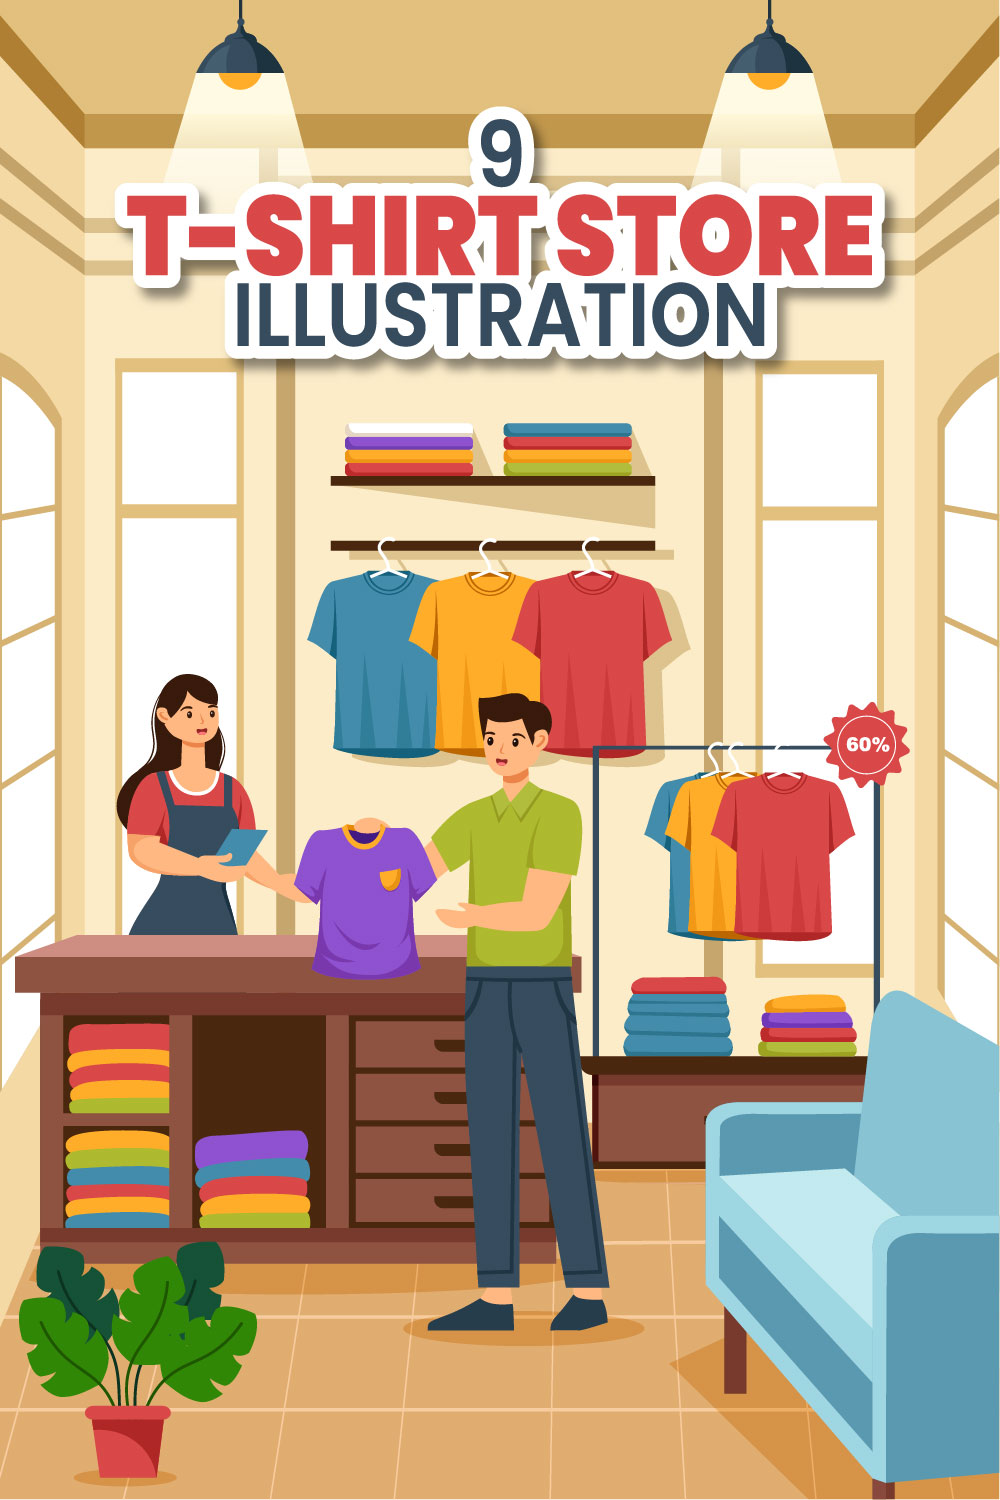 9 T-shirt Store Illustration pinterest preview image.